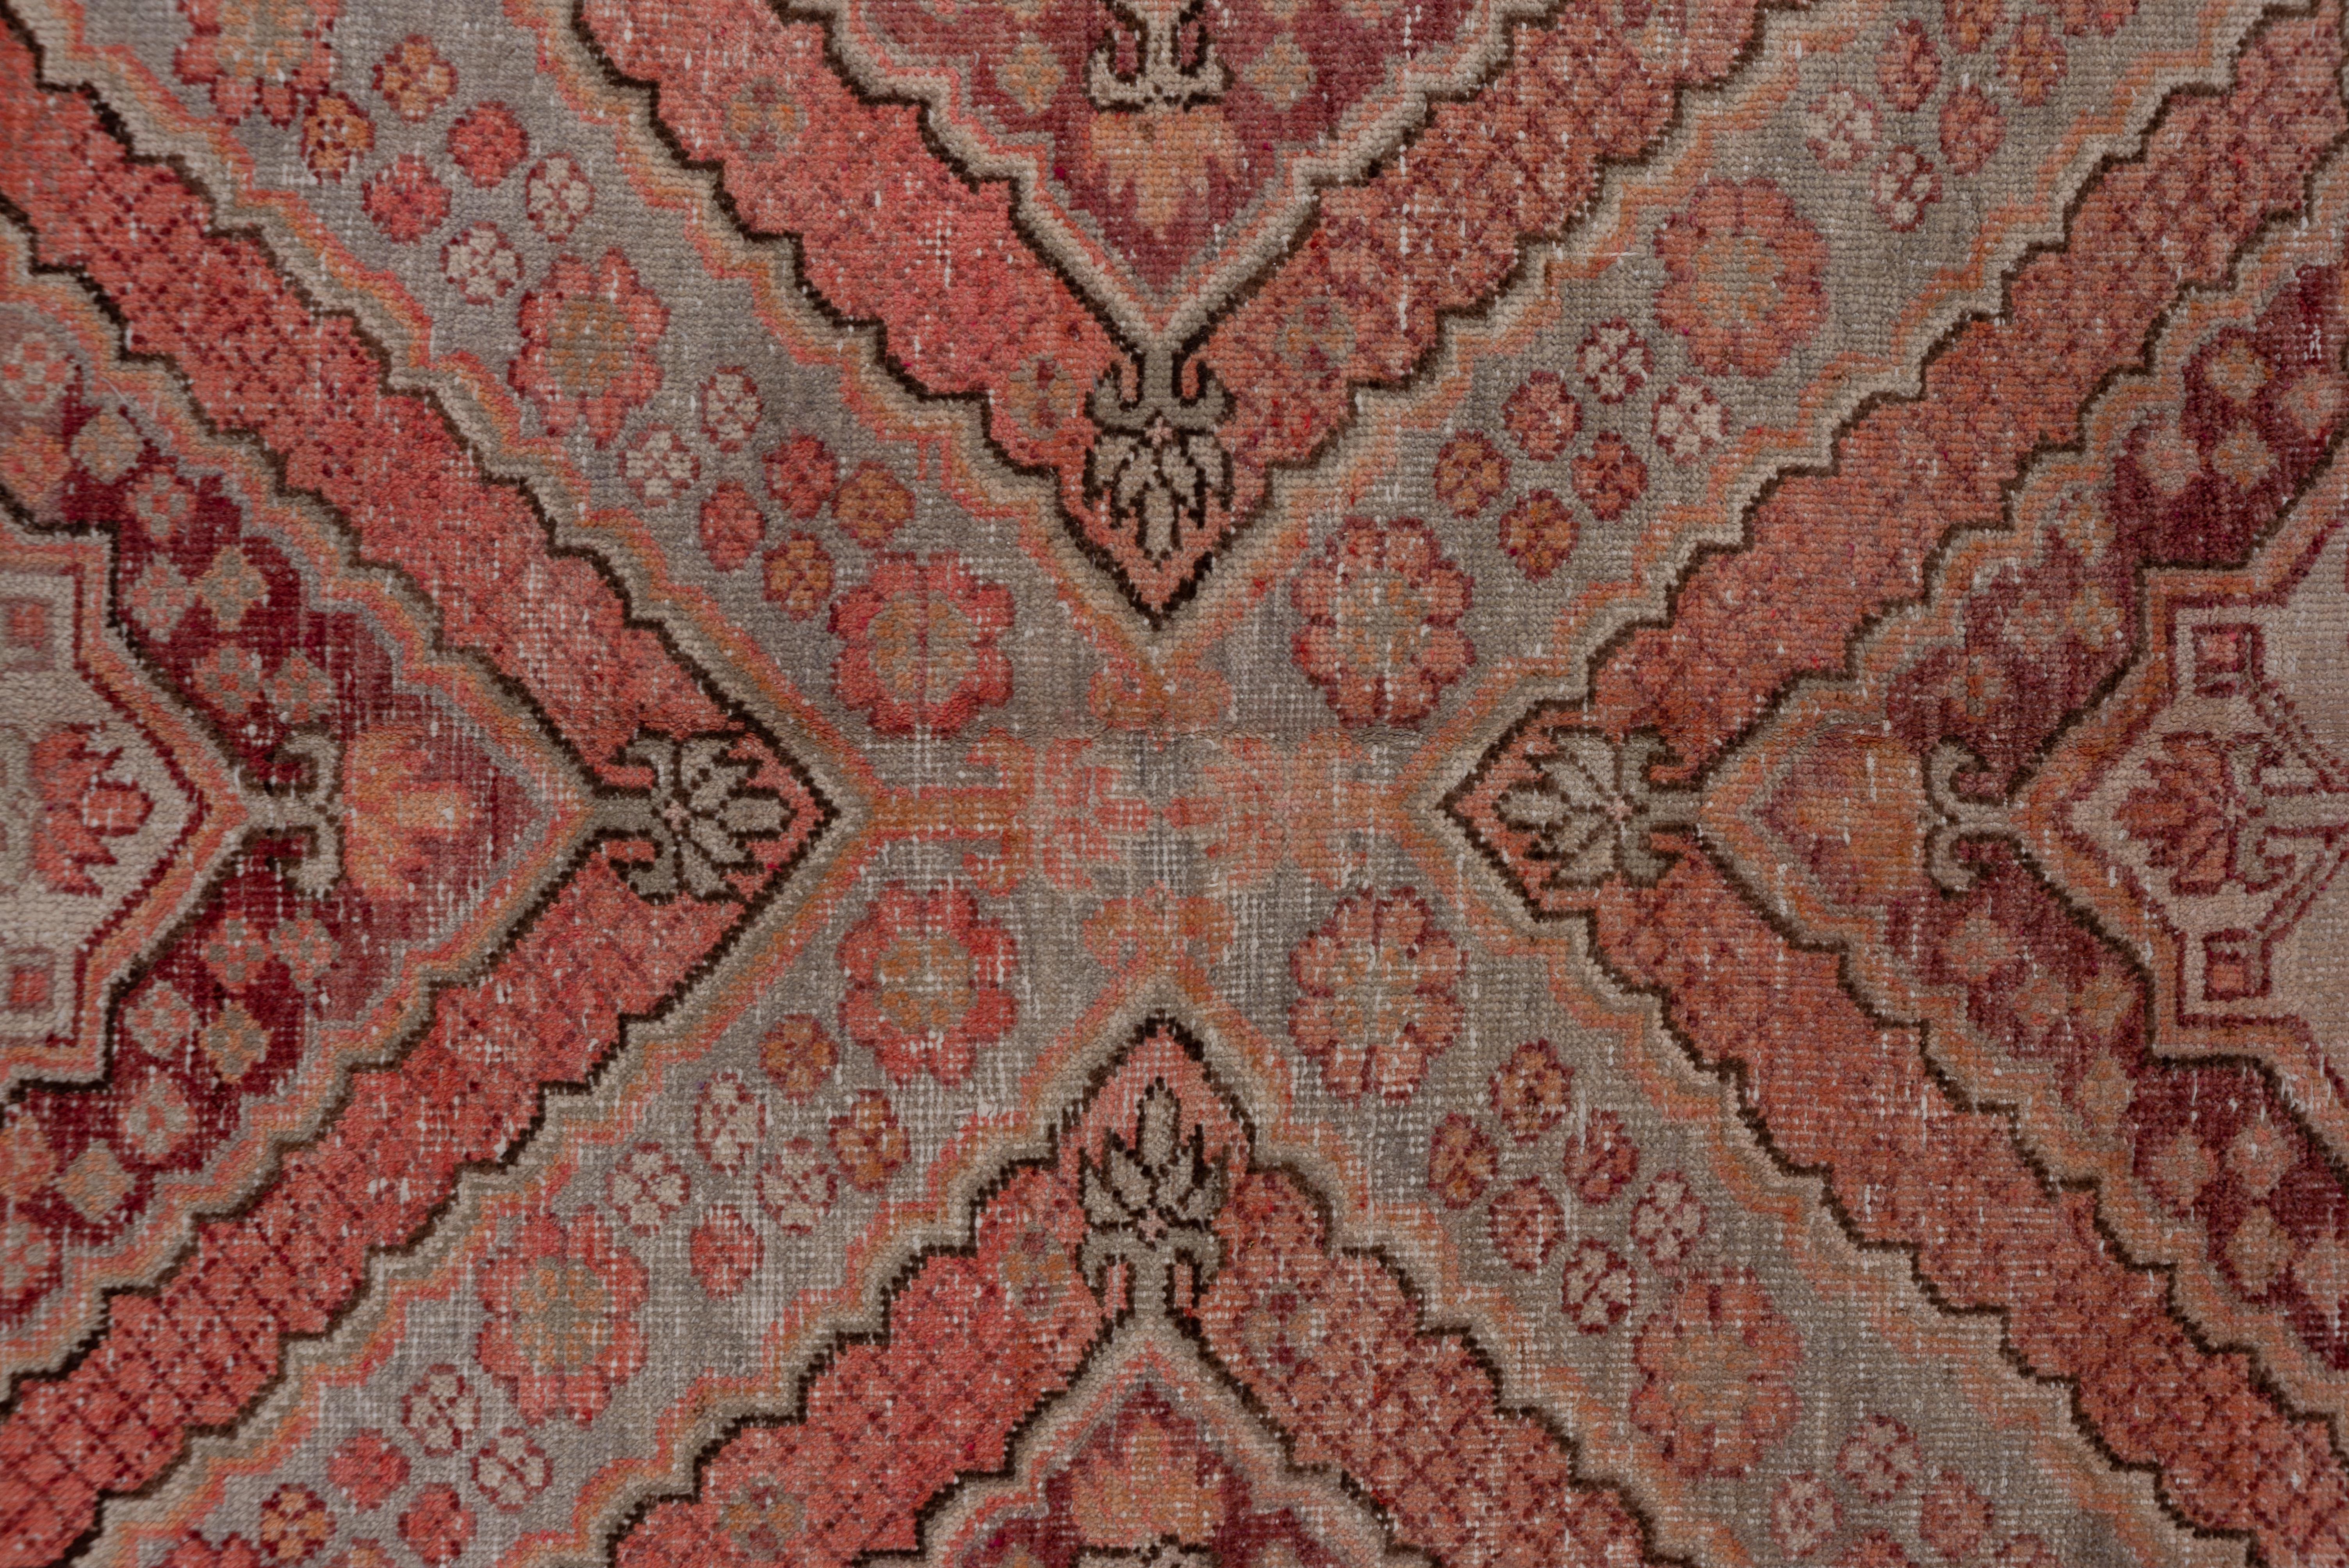 Wool Antique Khotan Rug - Red Hues, Triangular Detailing For Sale